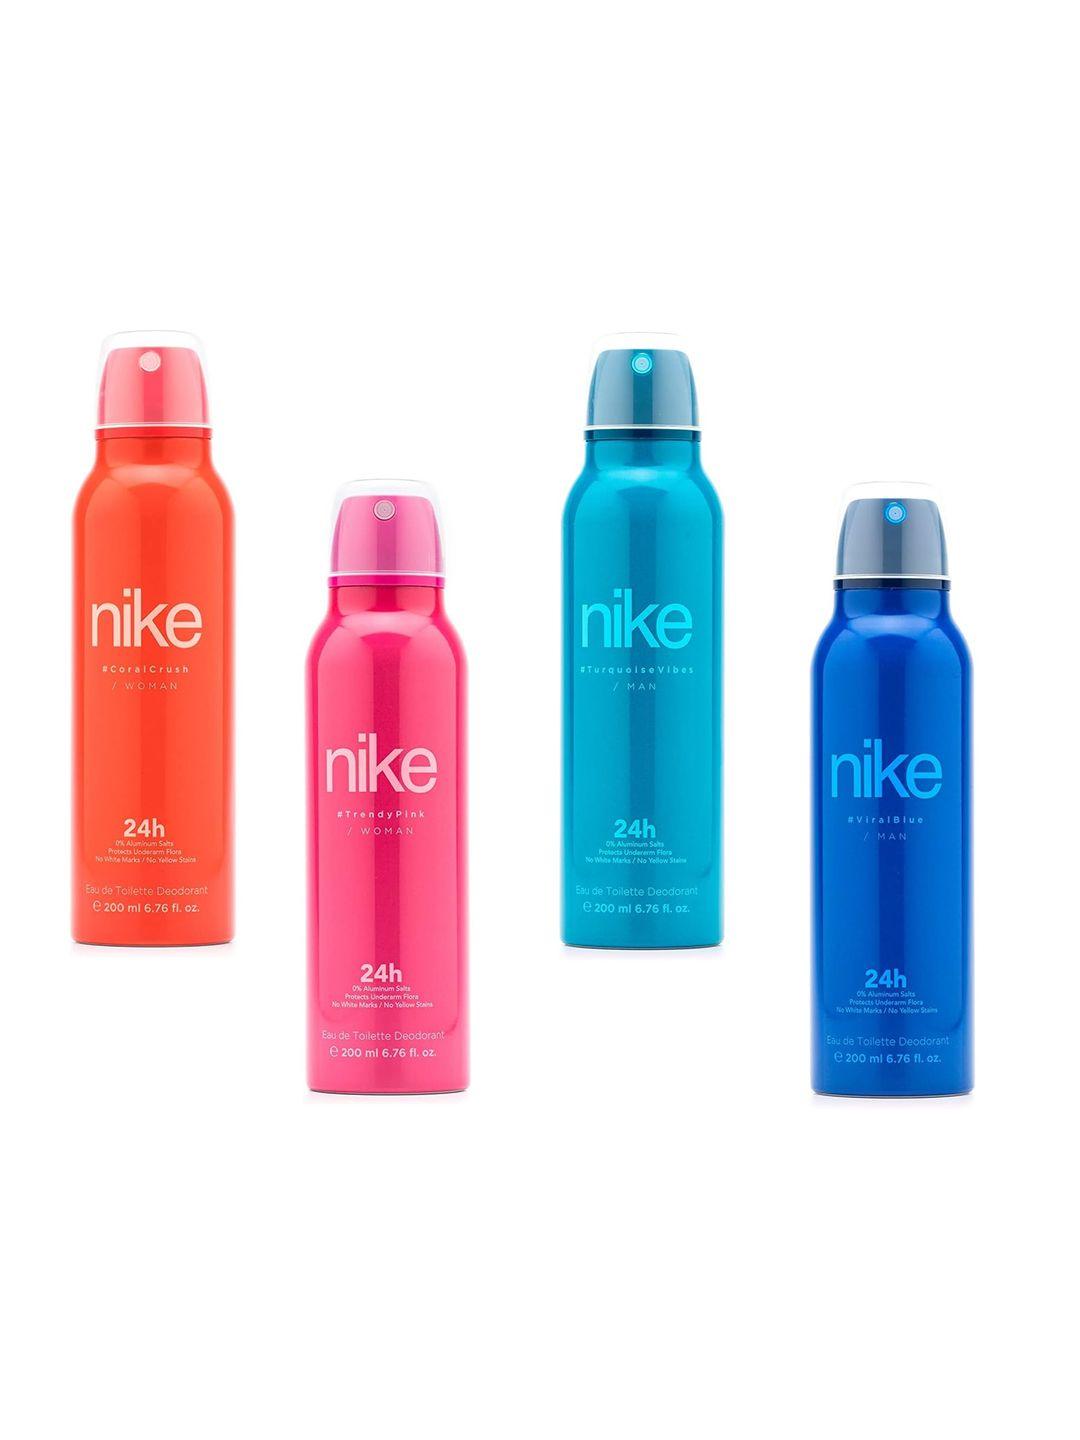 nike-set-of-4-long-lasting-eau-de-toilette-deodorant---200-ml-each